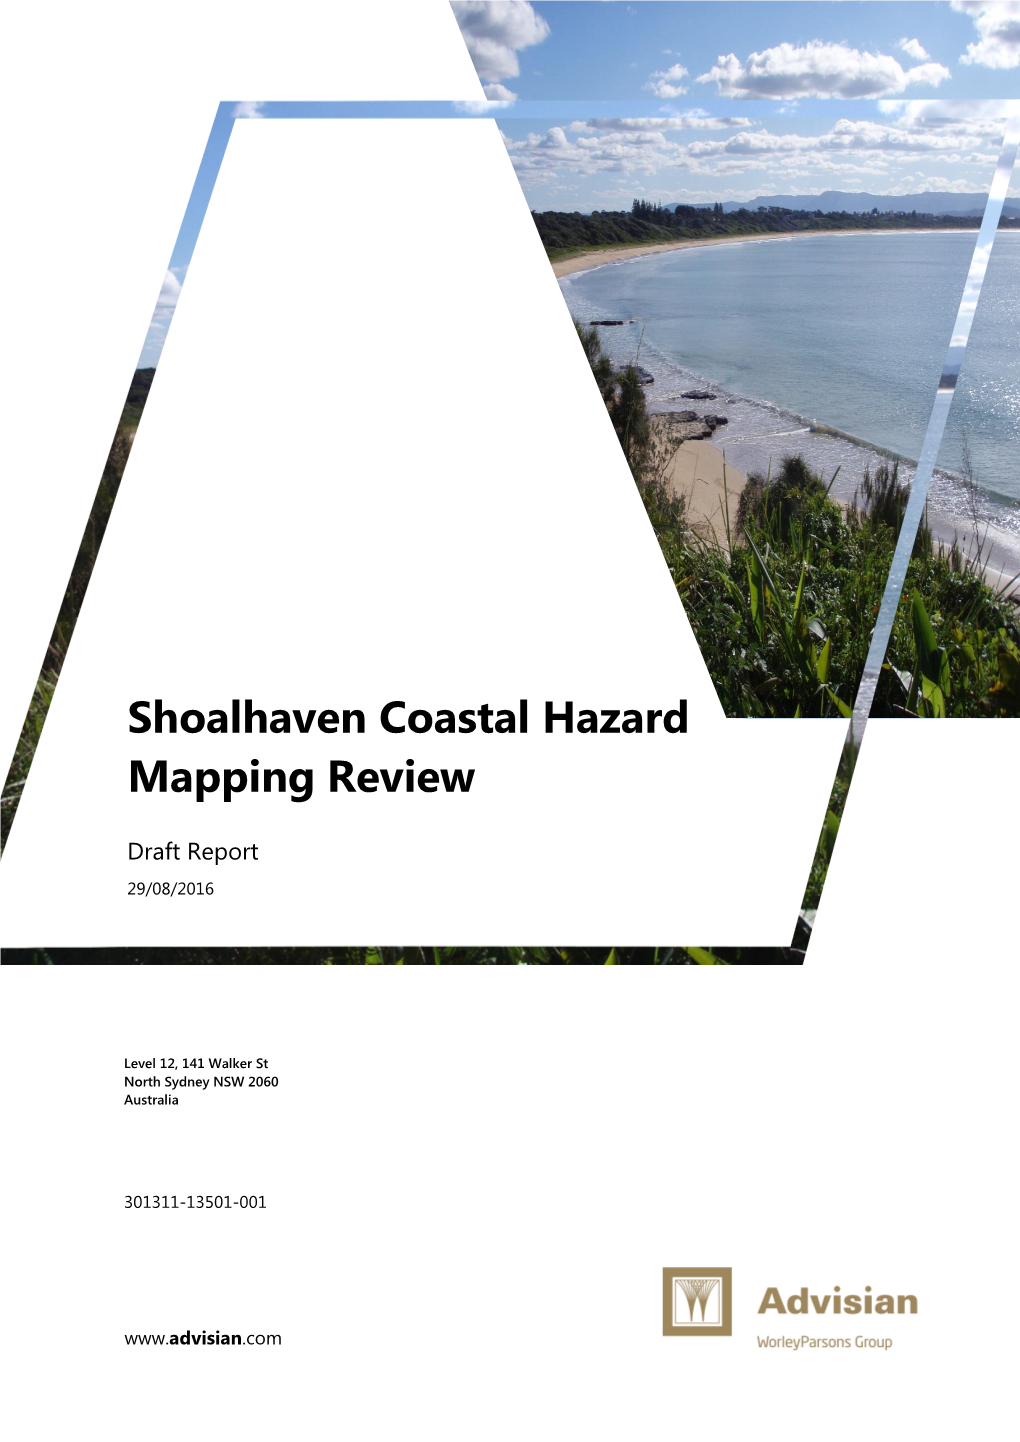 Shoalhaven Coastal Hazard Mapping Review